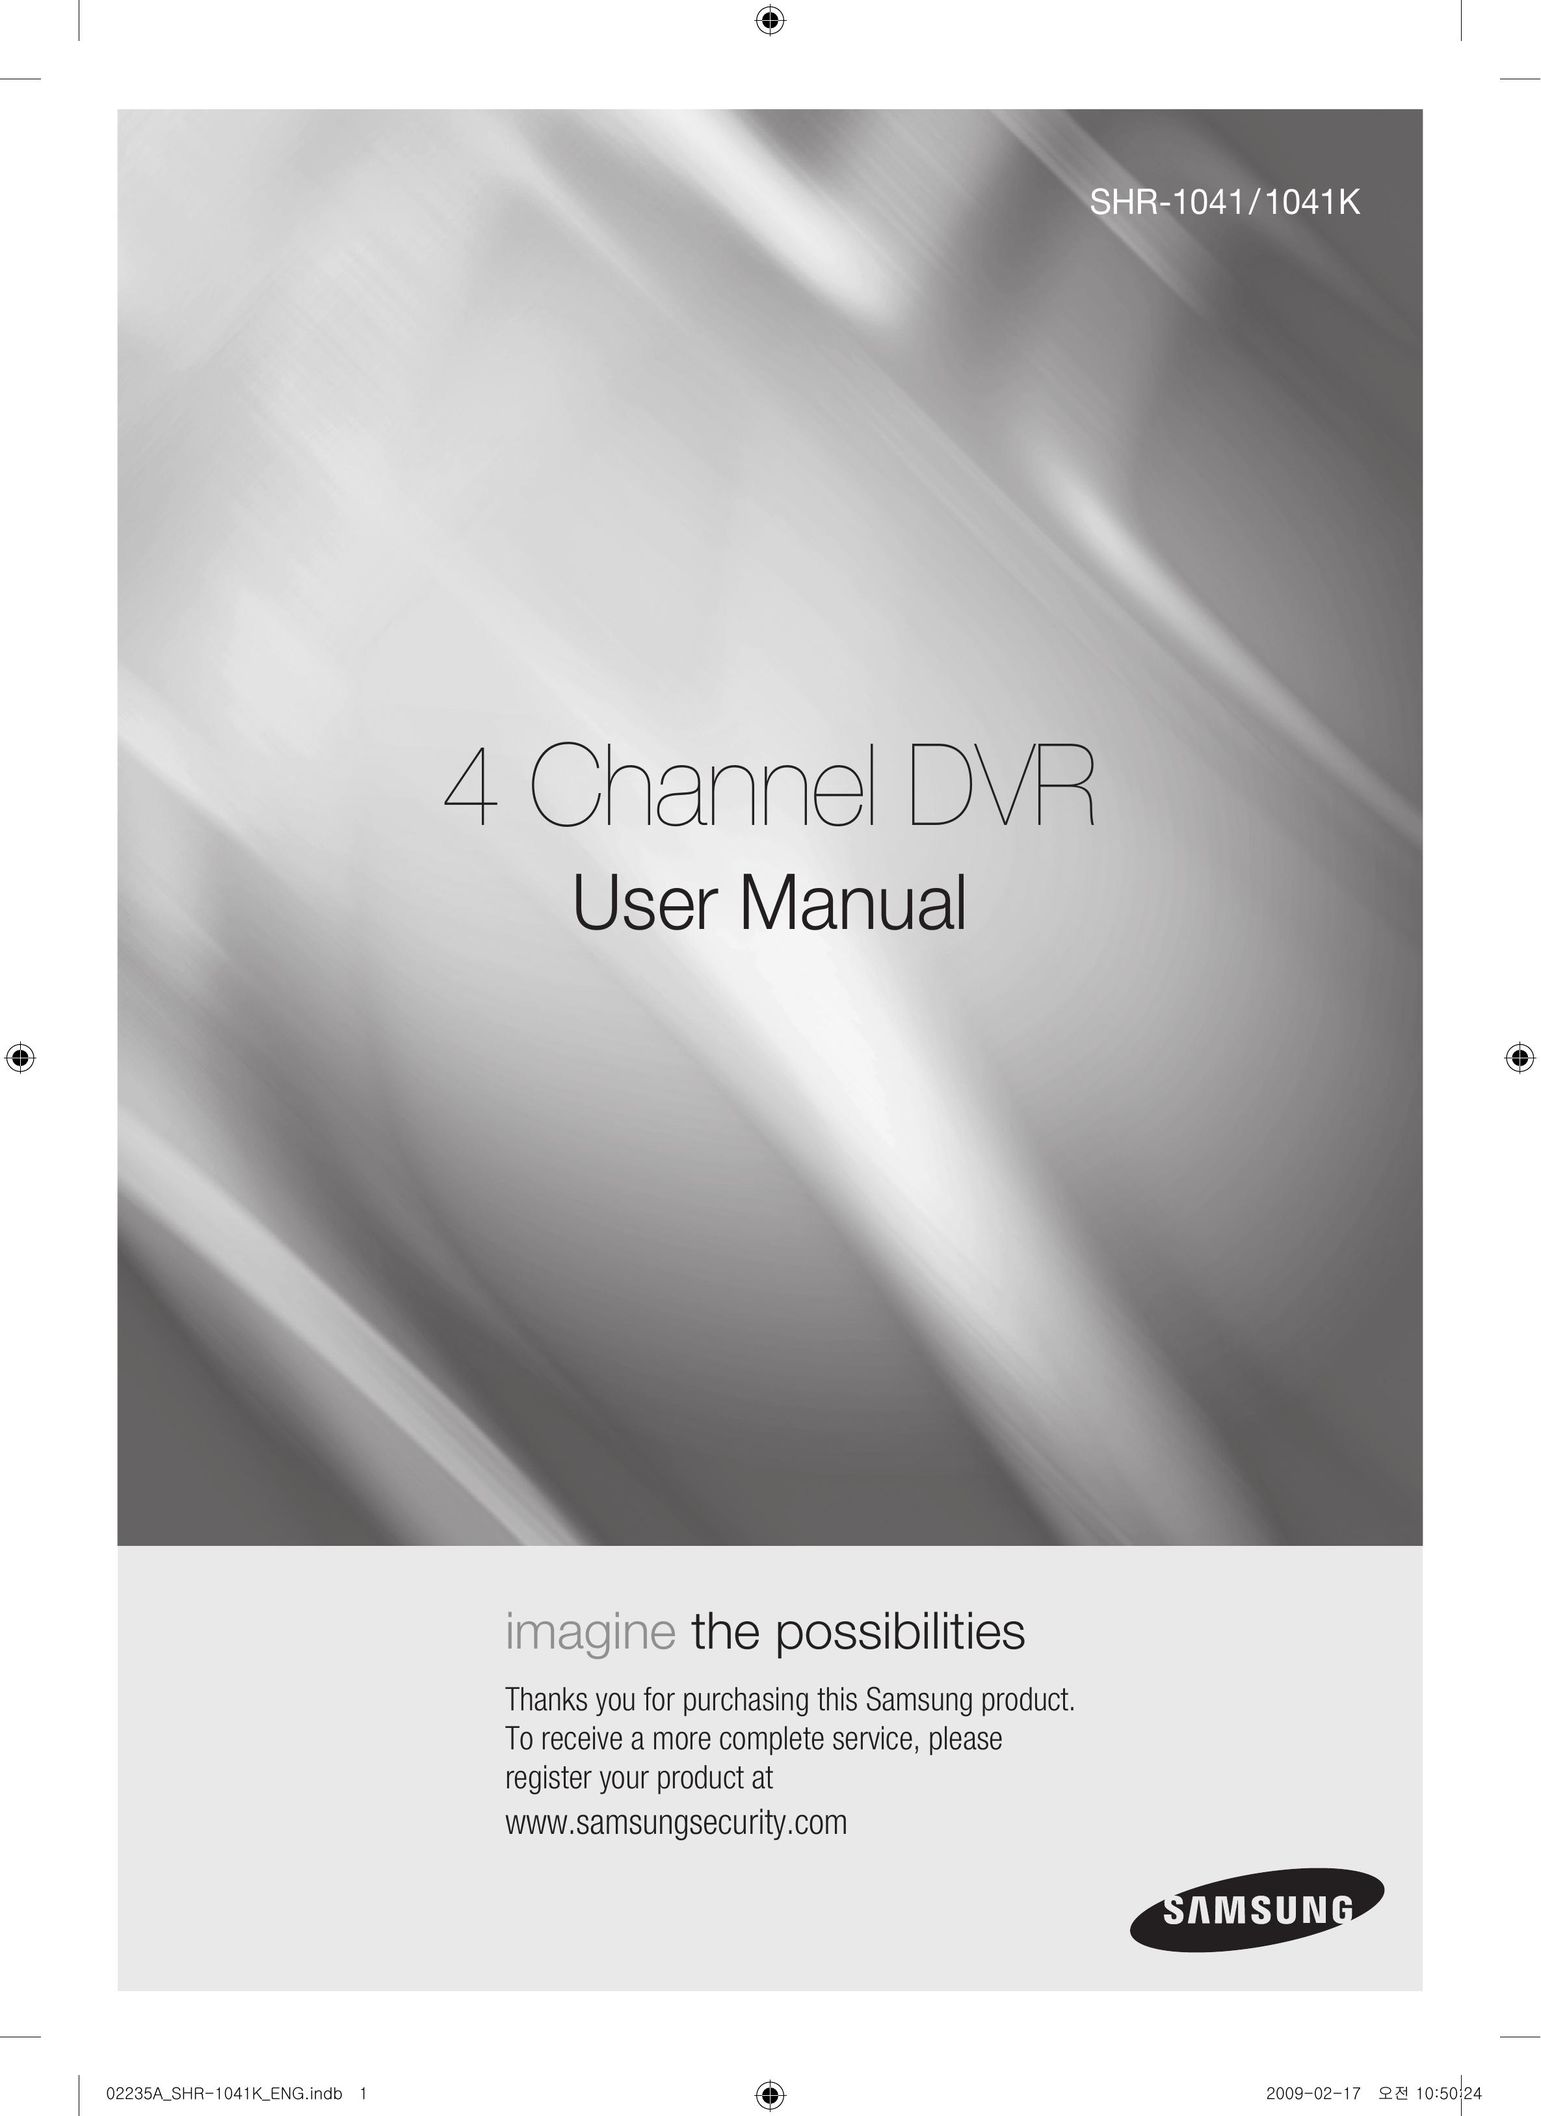 Samsung SHR-1041K DVR User Manual